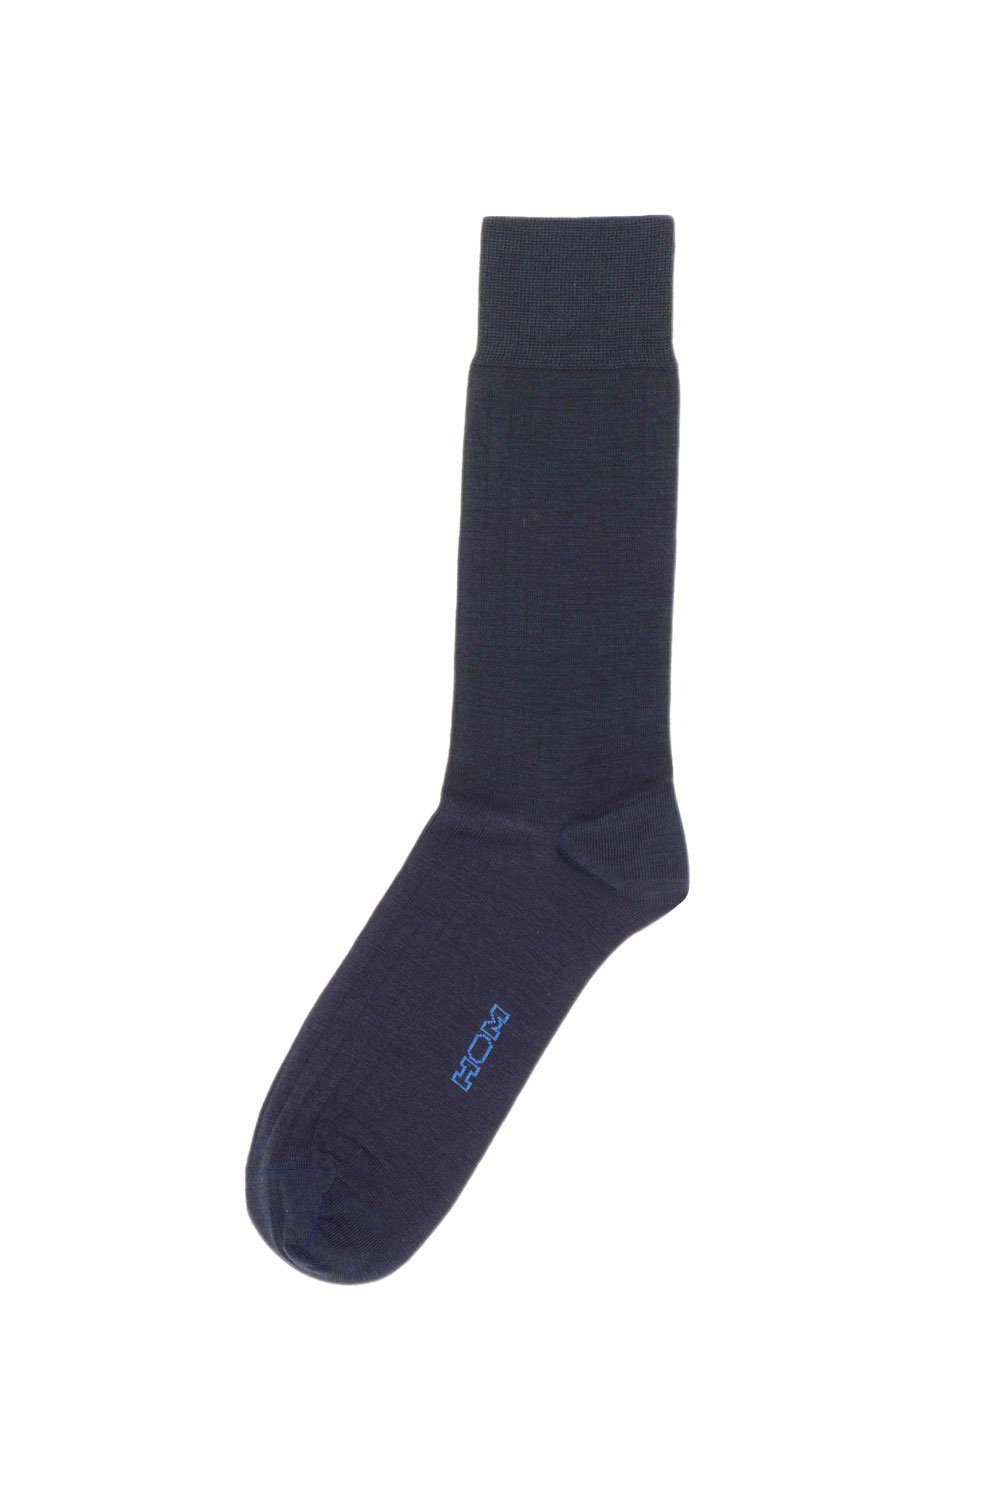 Hom Socken Socken Laine Coton 407548 navy